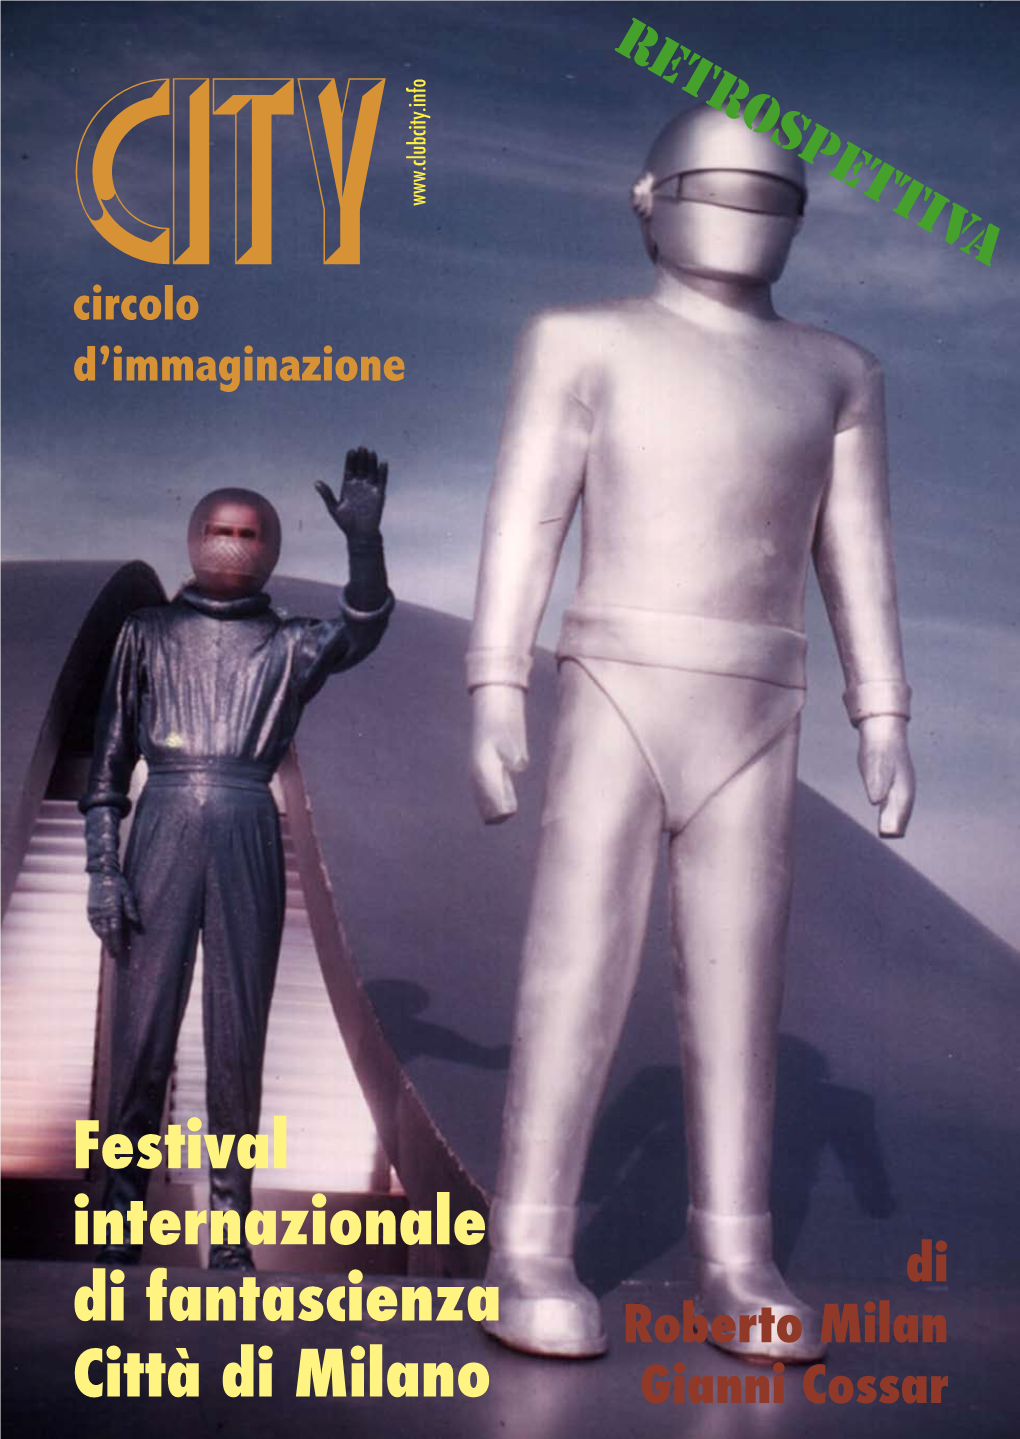 Festival Internazionale Di Fantascienza Città Di Milano Schede Di Roberto Milan, Analisi Di Gianni Cossar